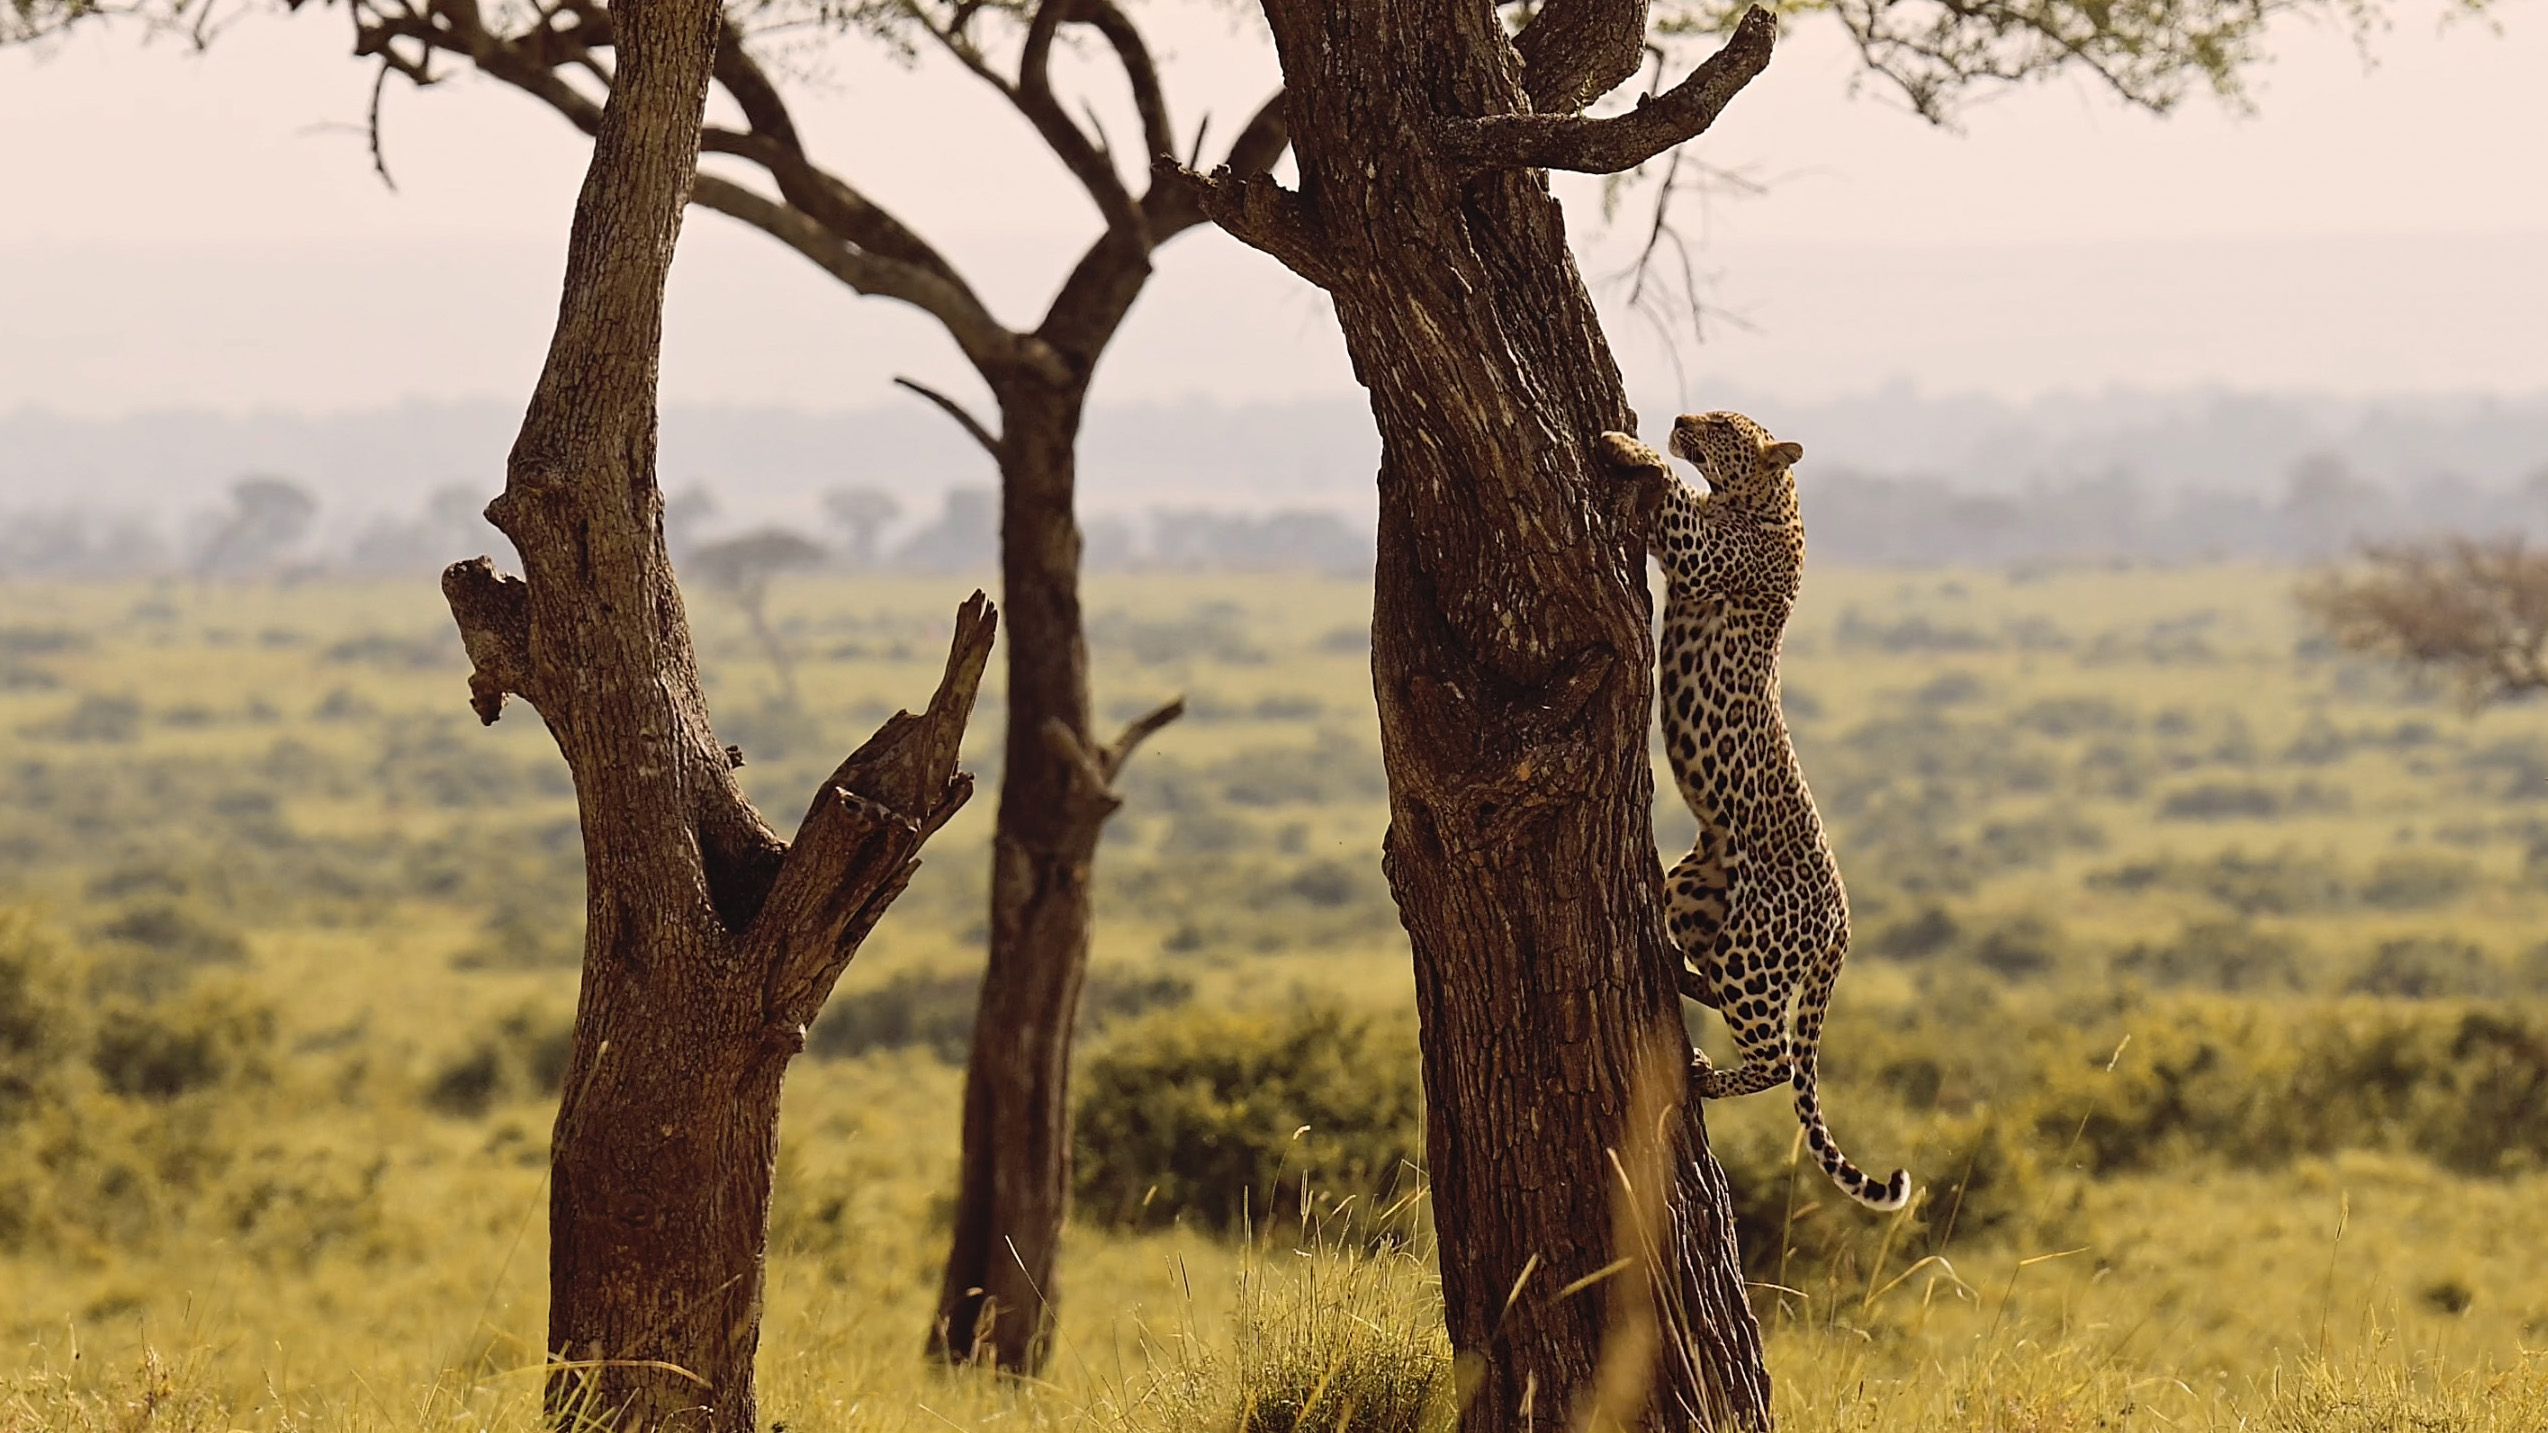 Leopard climbing a tree in a grassland environment